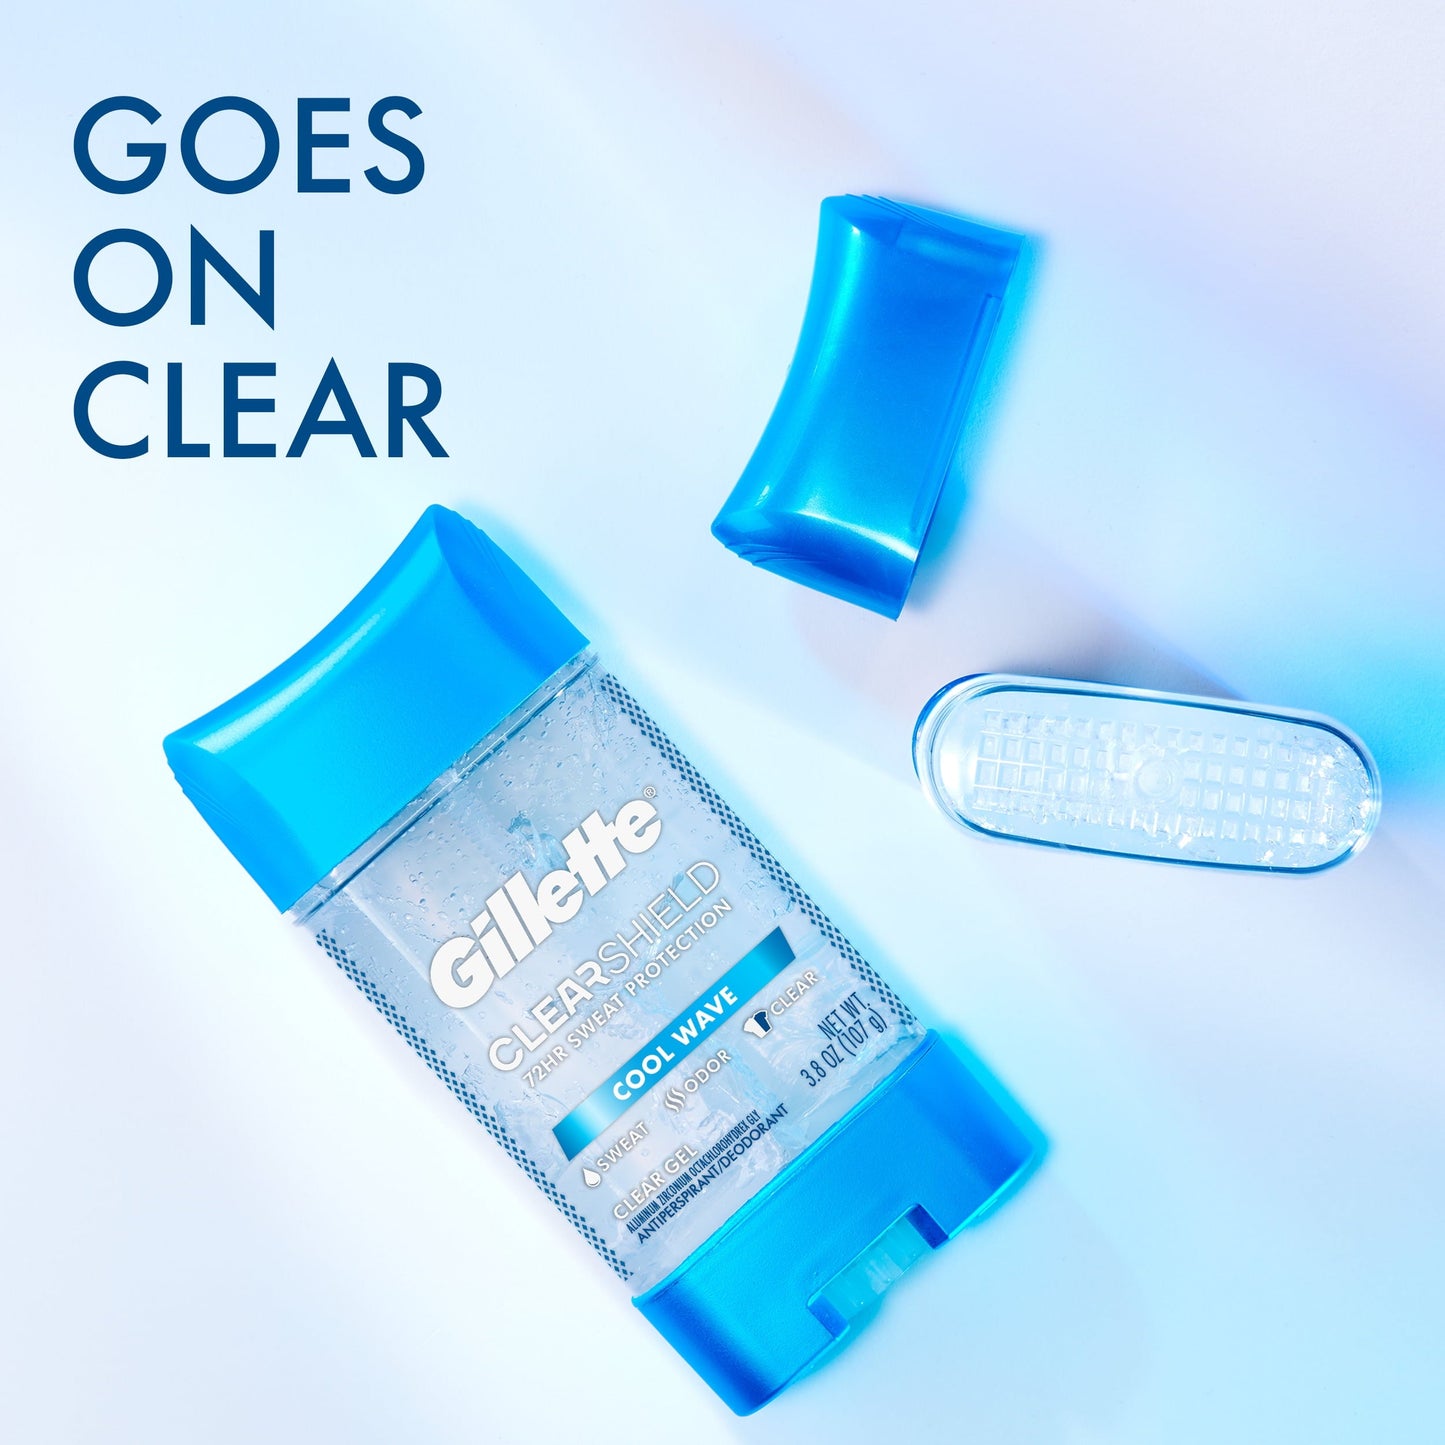 Gillette Antiperspirant and Deodorant for Men, Clear Gel, Arctic Ice, 3.8oz